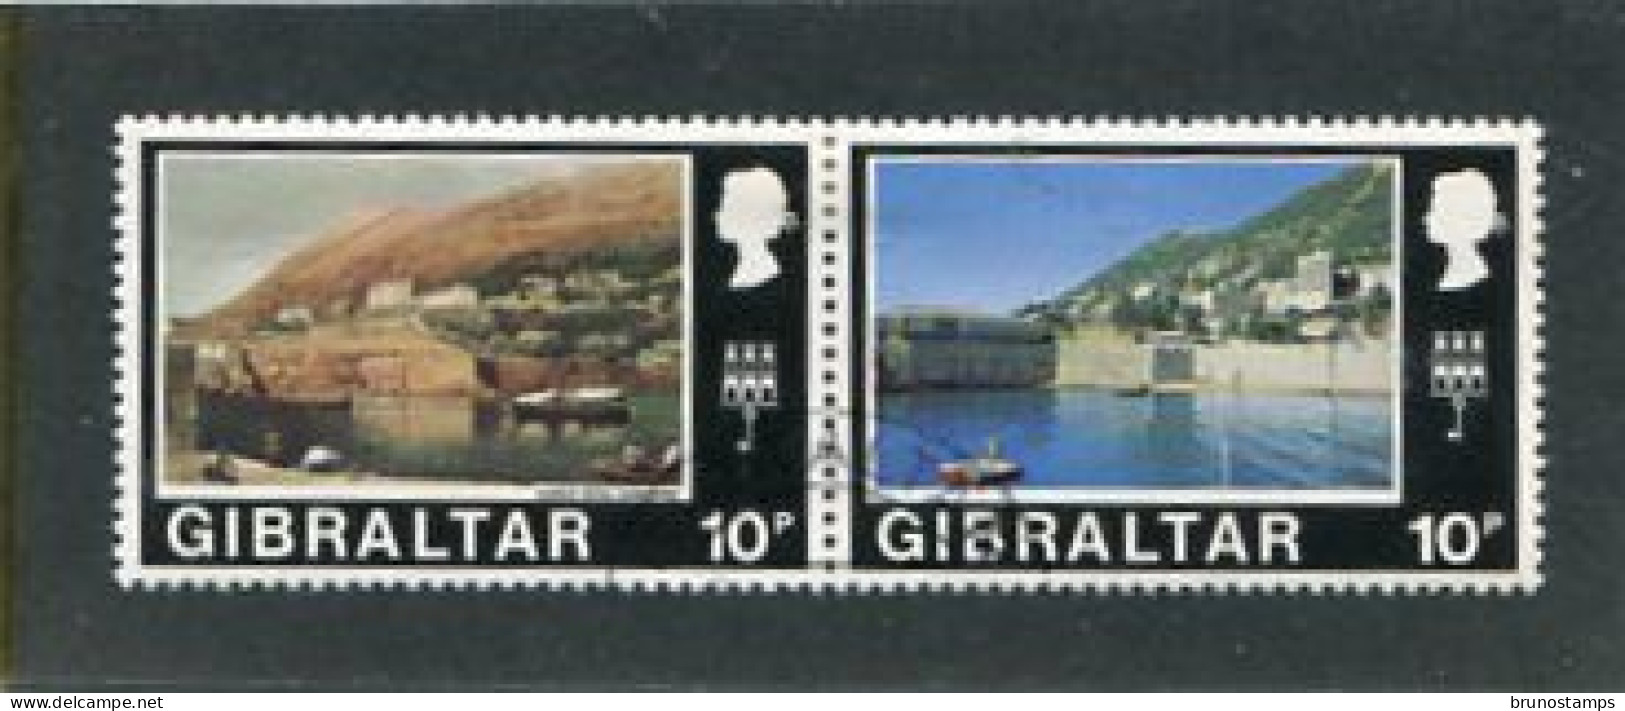 GIBRALTAR - 1971  10p  DEFINITIVE PAIR  FINE USED - Gibraltar